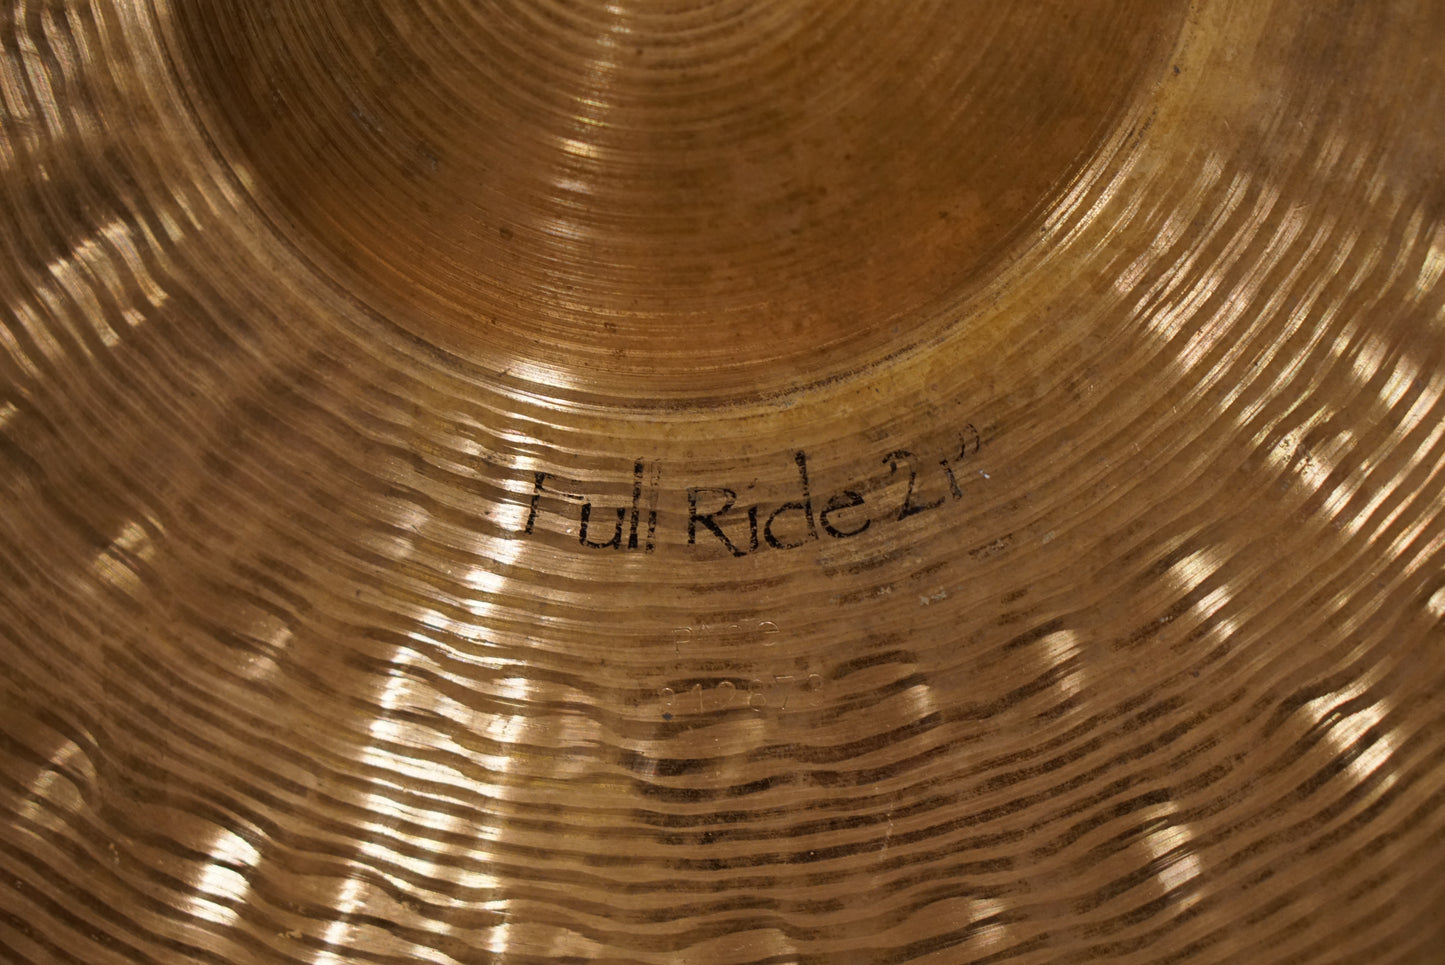 Paiste 21" Signature Series Full Ride Cymbal - 2866g